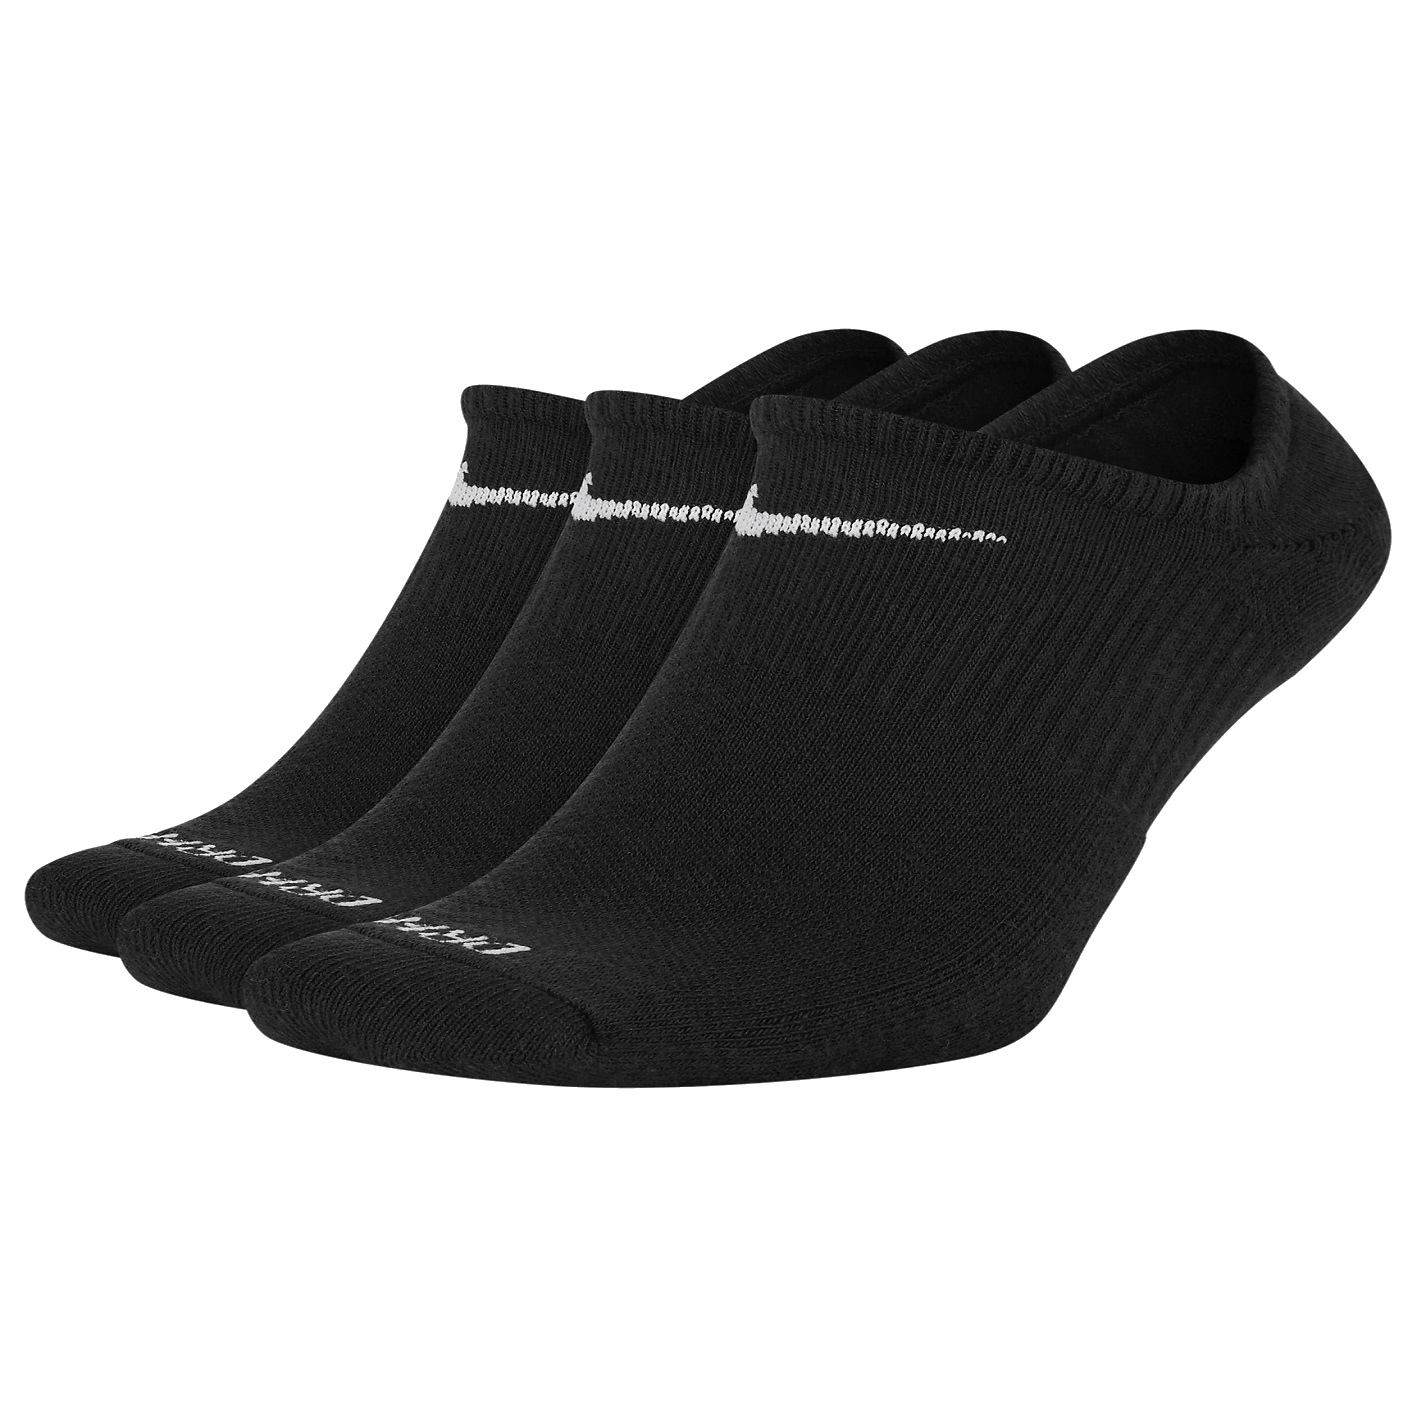 ☆ Nike Everyday Dri-Fit Socken 3er Pack schwarz - hier bestellen!